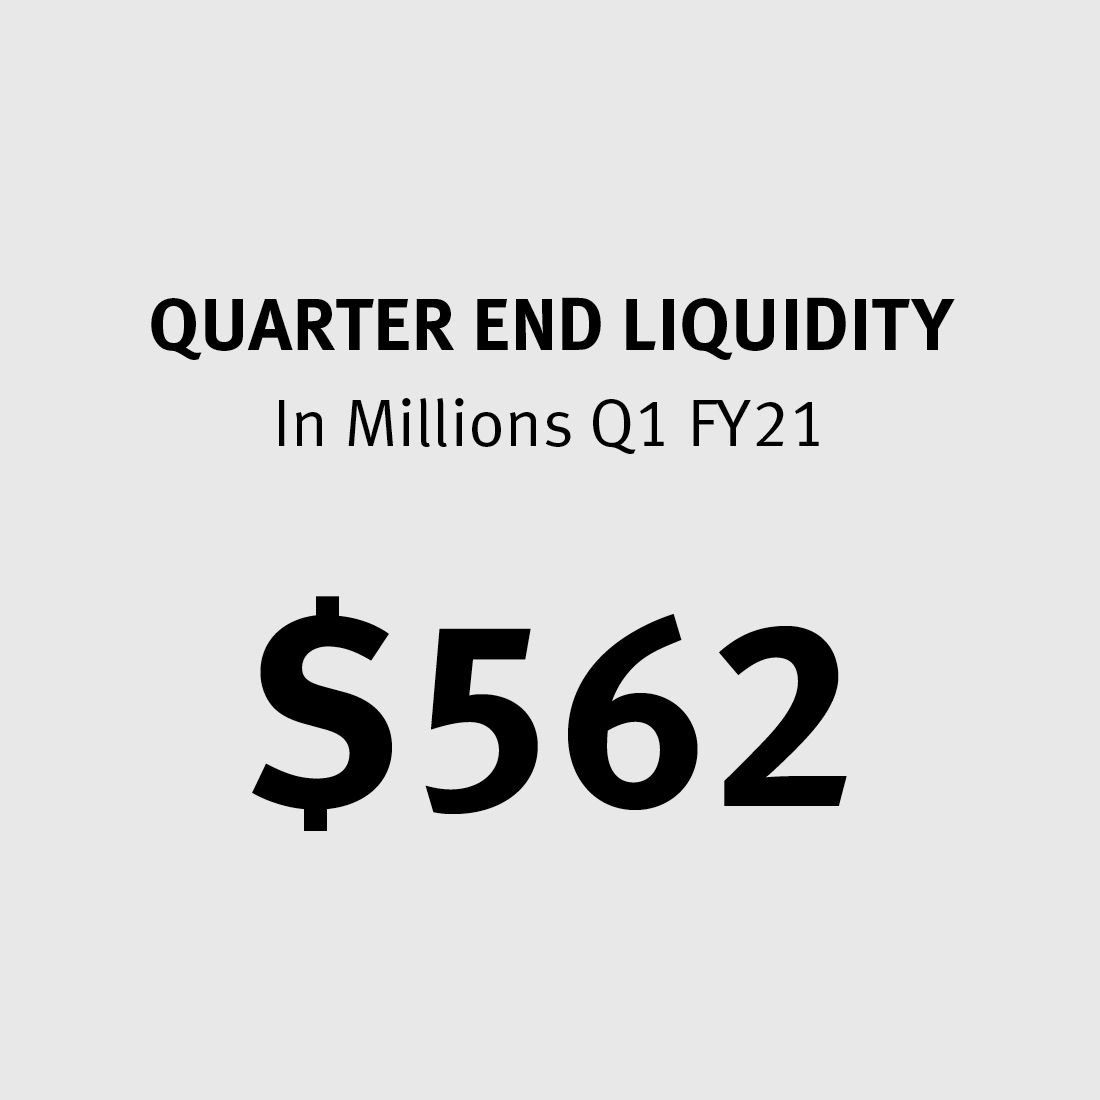 Quarter End Liquidity $562M